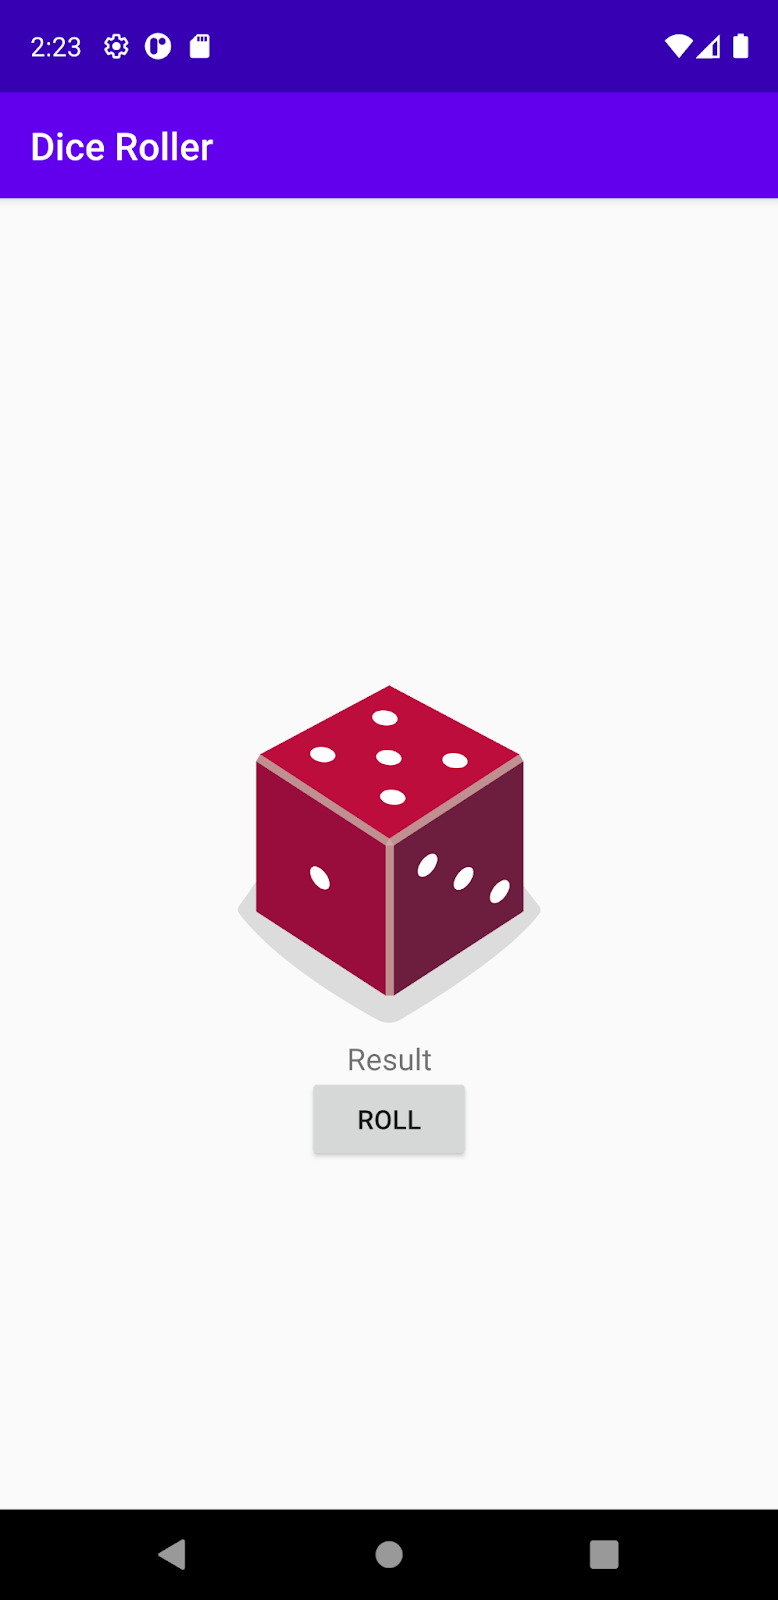 'Result'가 자리표시자로 표시된 상자가 있는 DiceRoller 앱